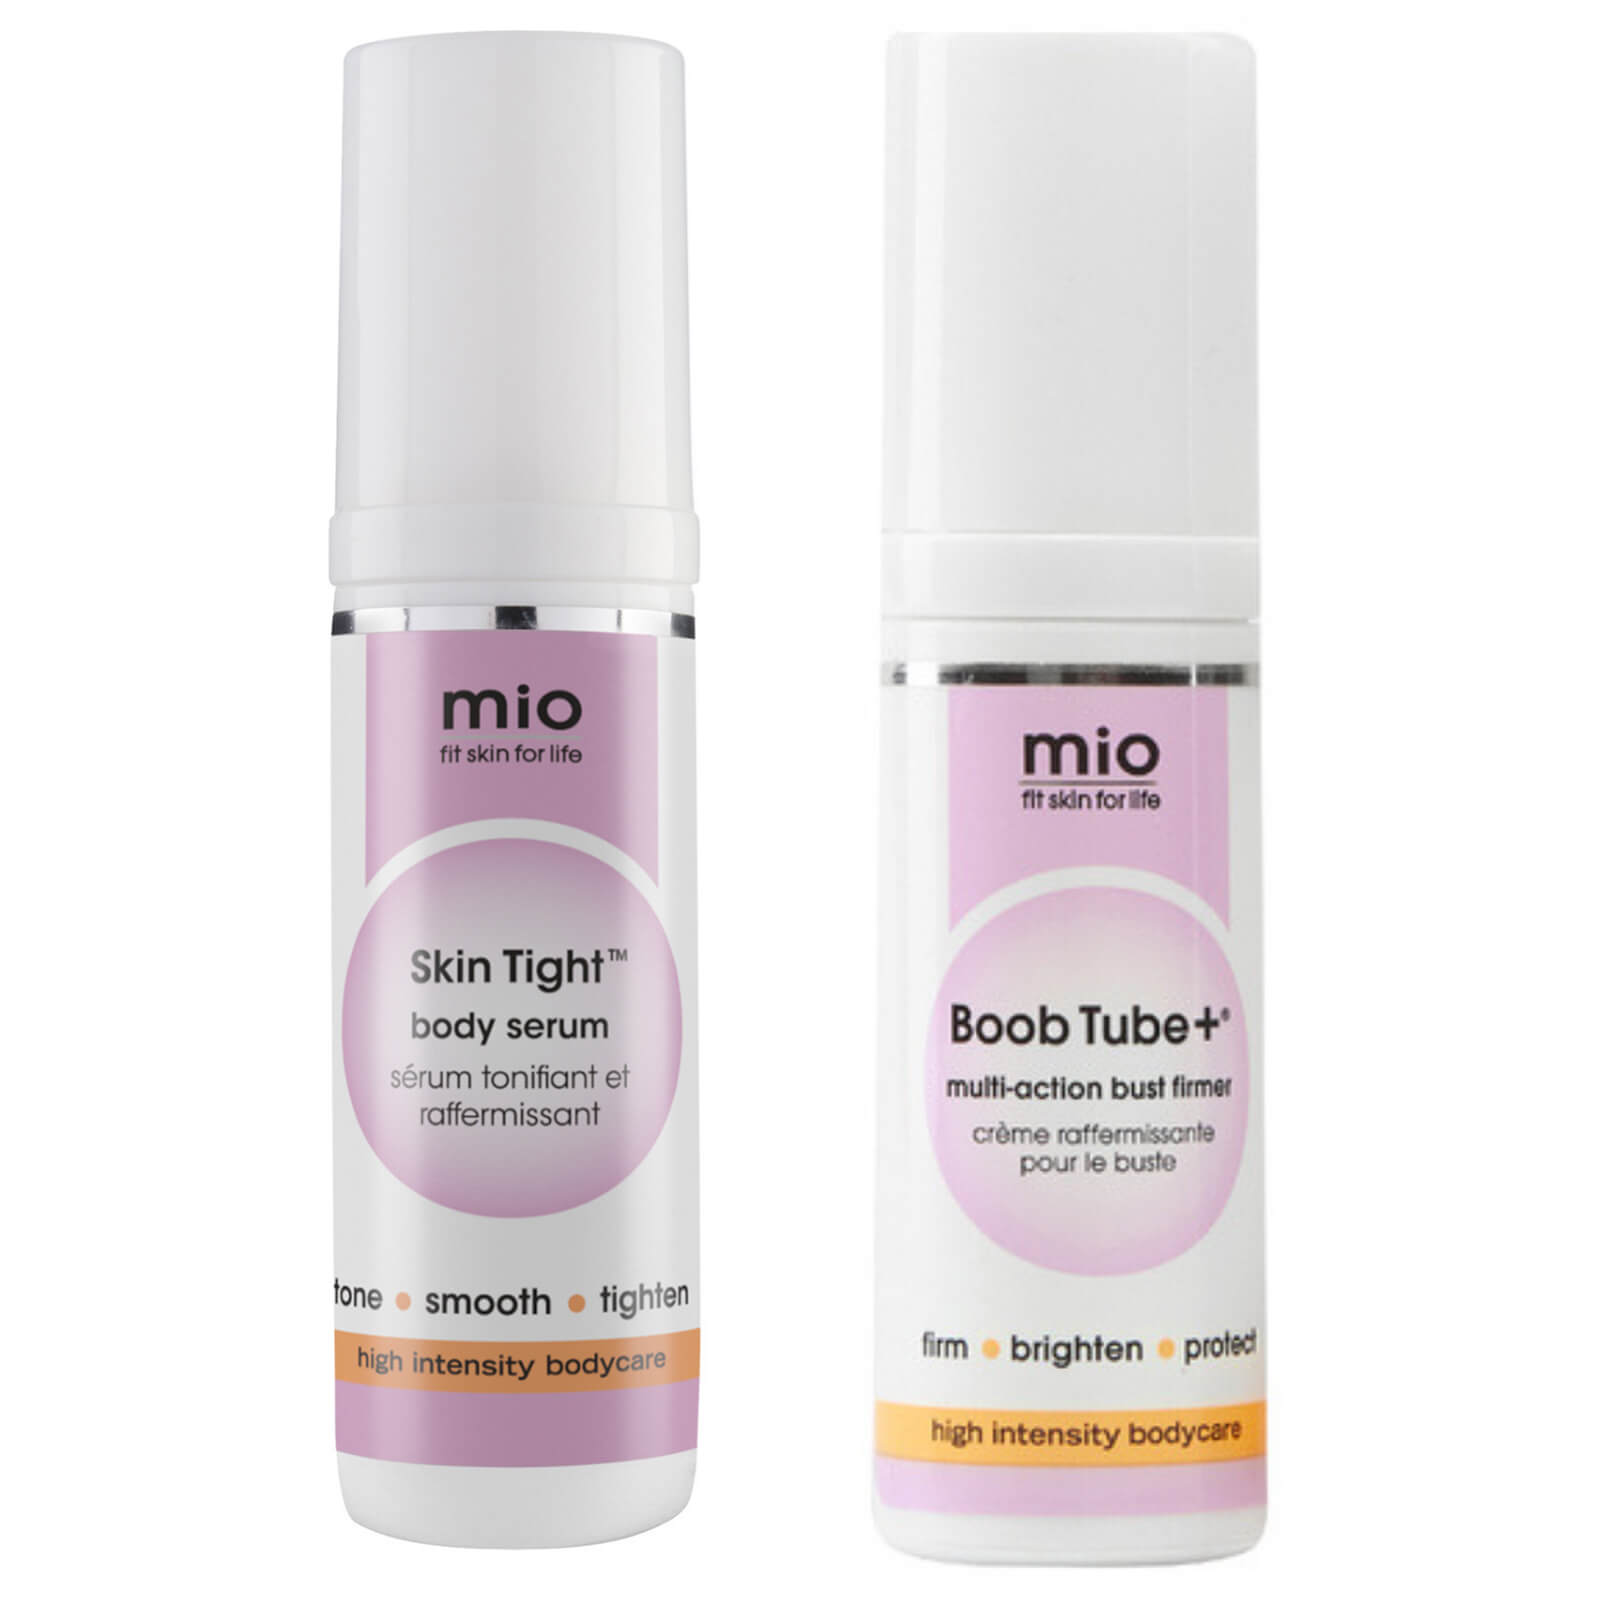 Mio Skincare Skin Tight and Boob Tube+ Travel Size Duo